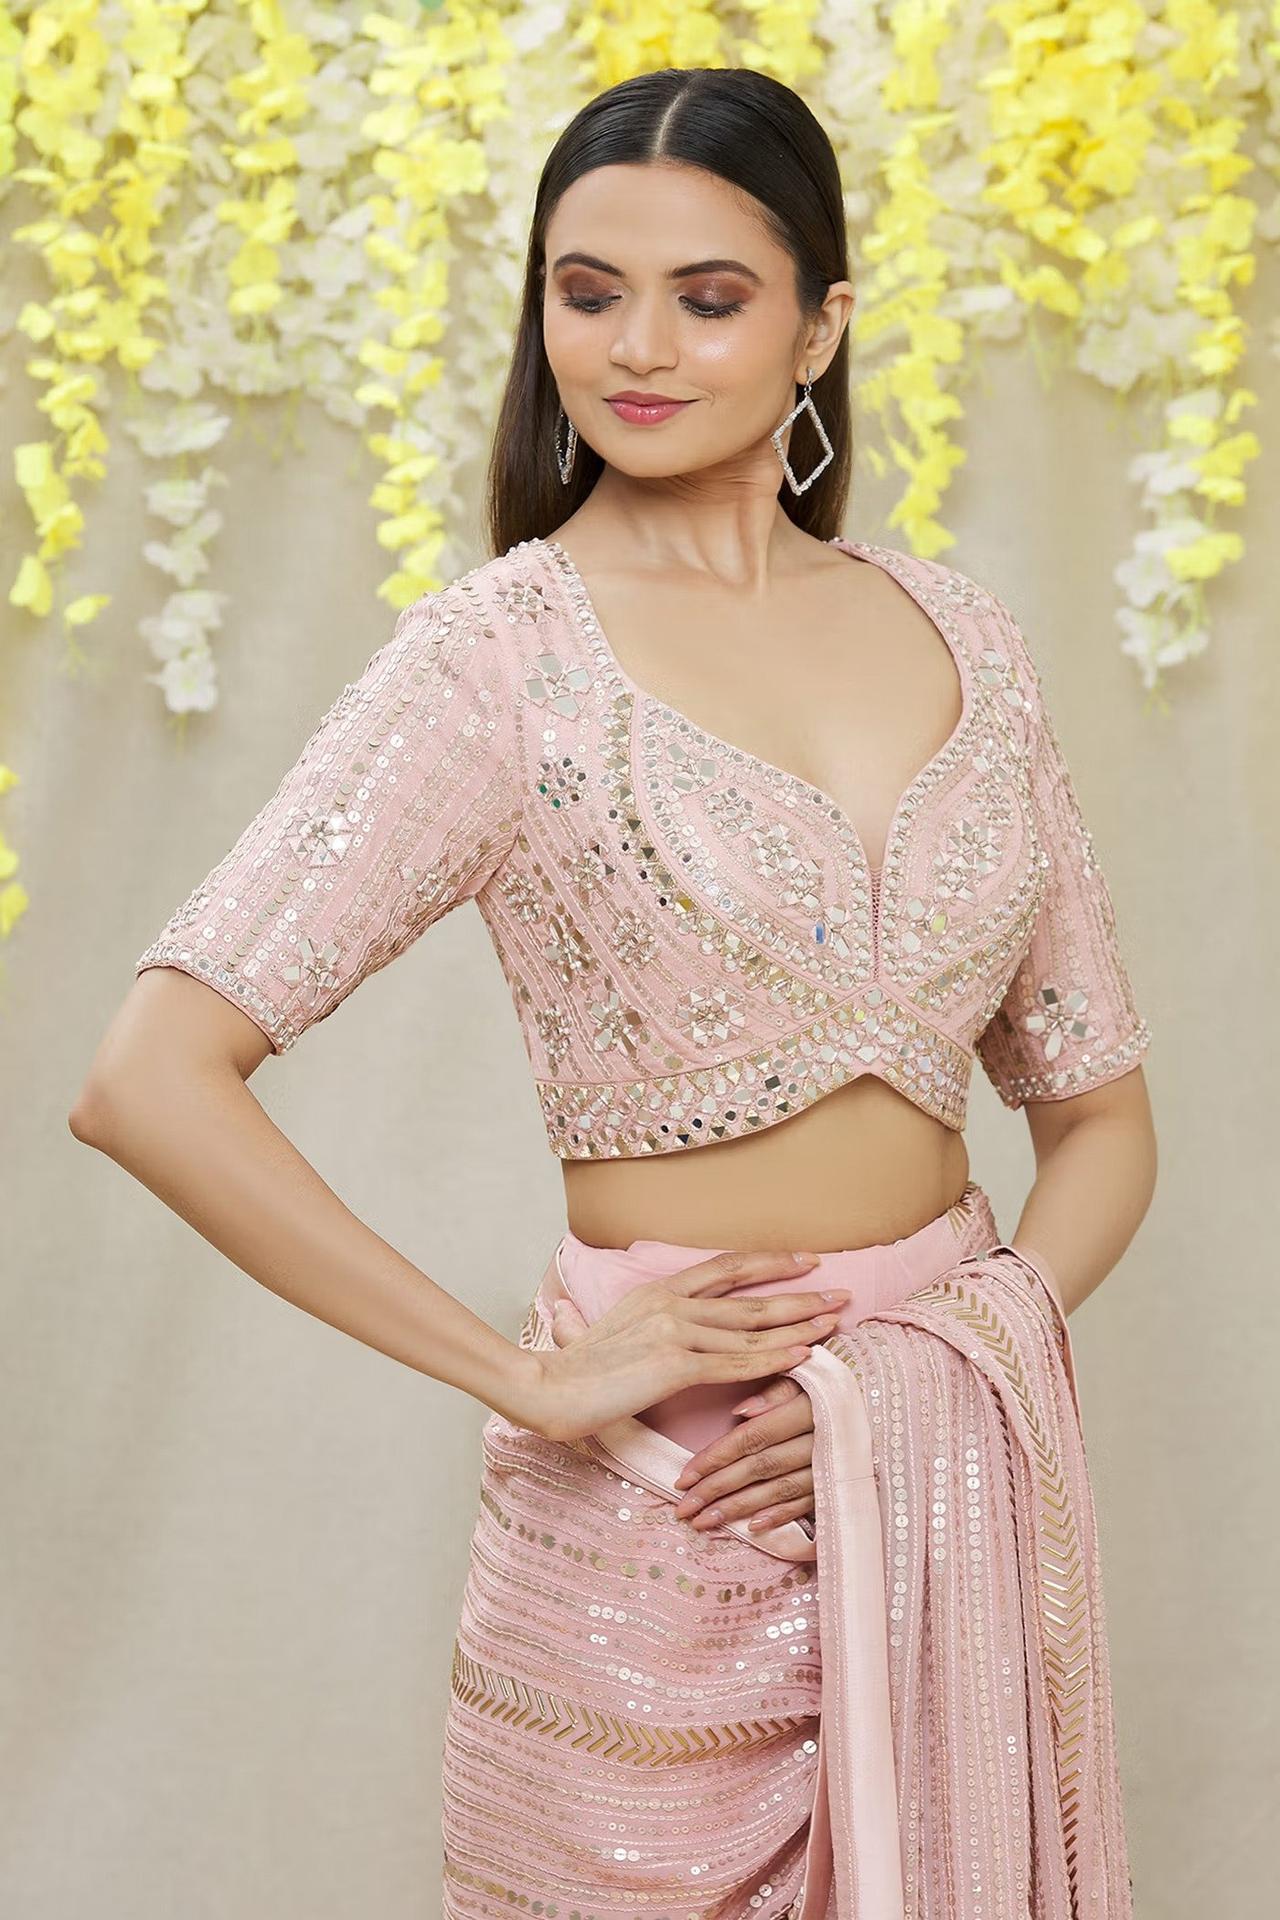 Saree blouse double sleeve.  Lace blouse design, Sari blouse